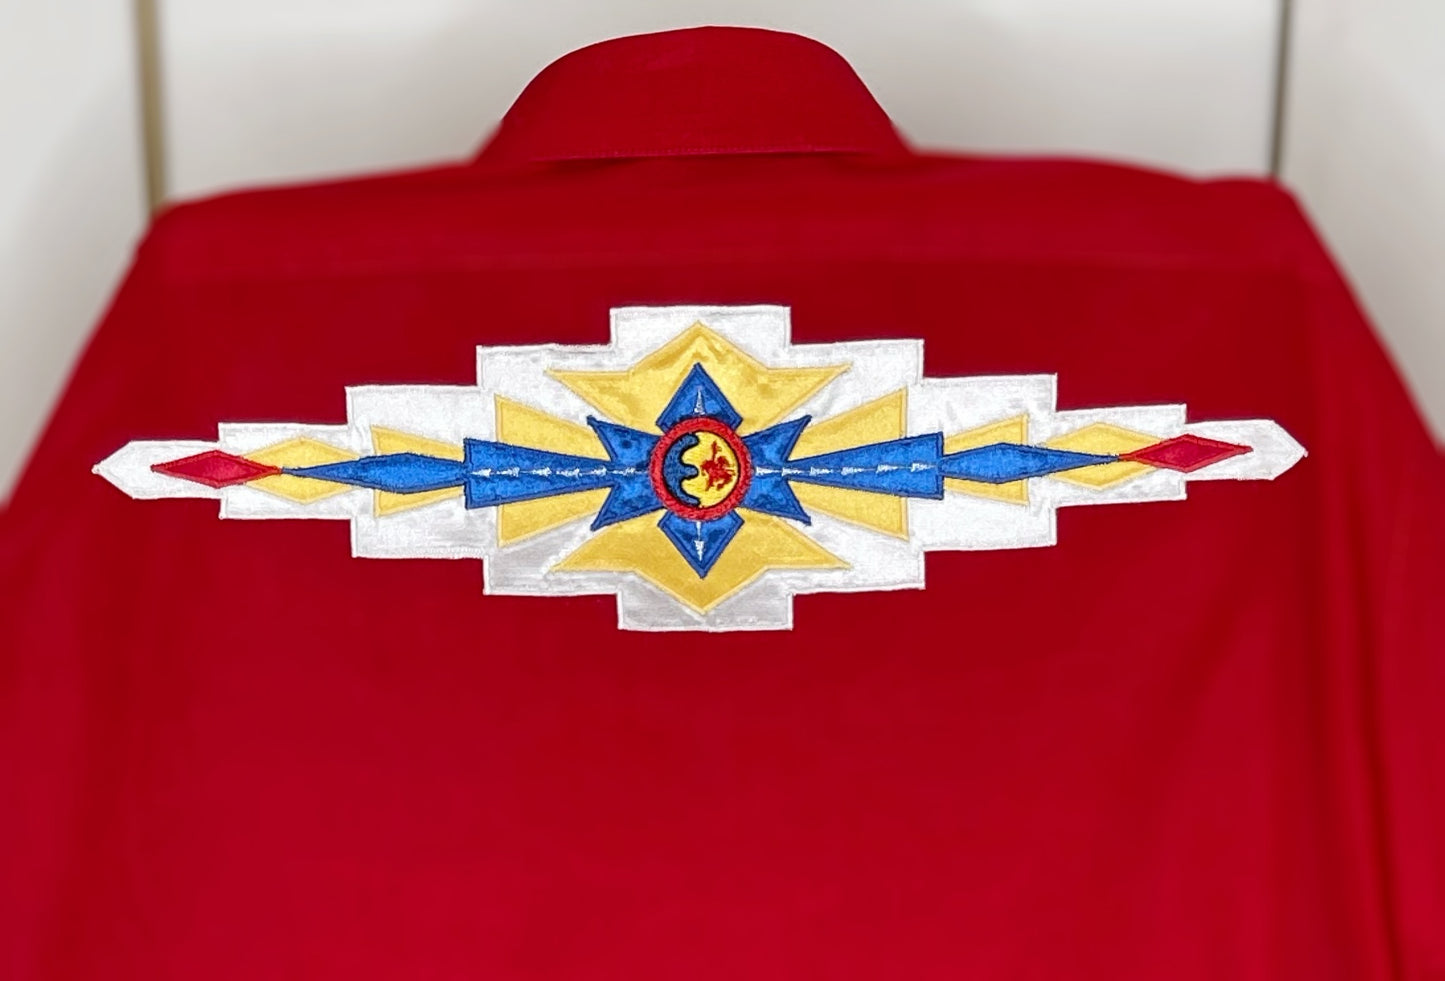 Red Comanche Ribbon Shirt